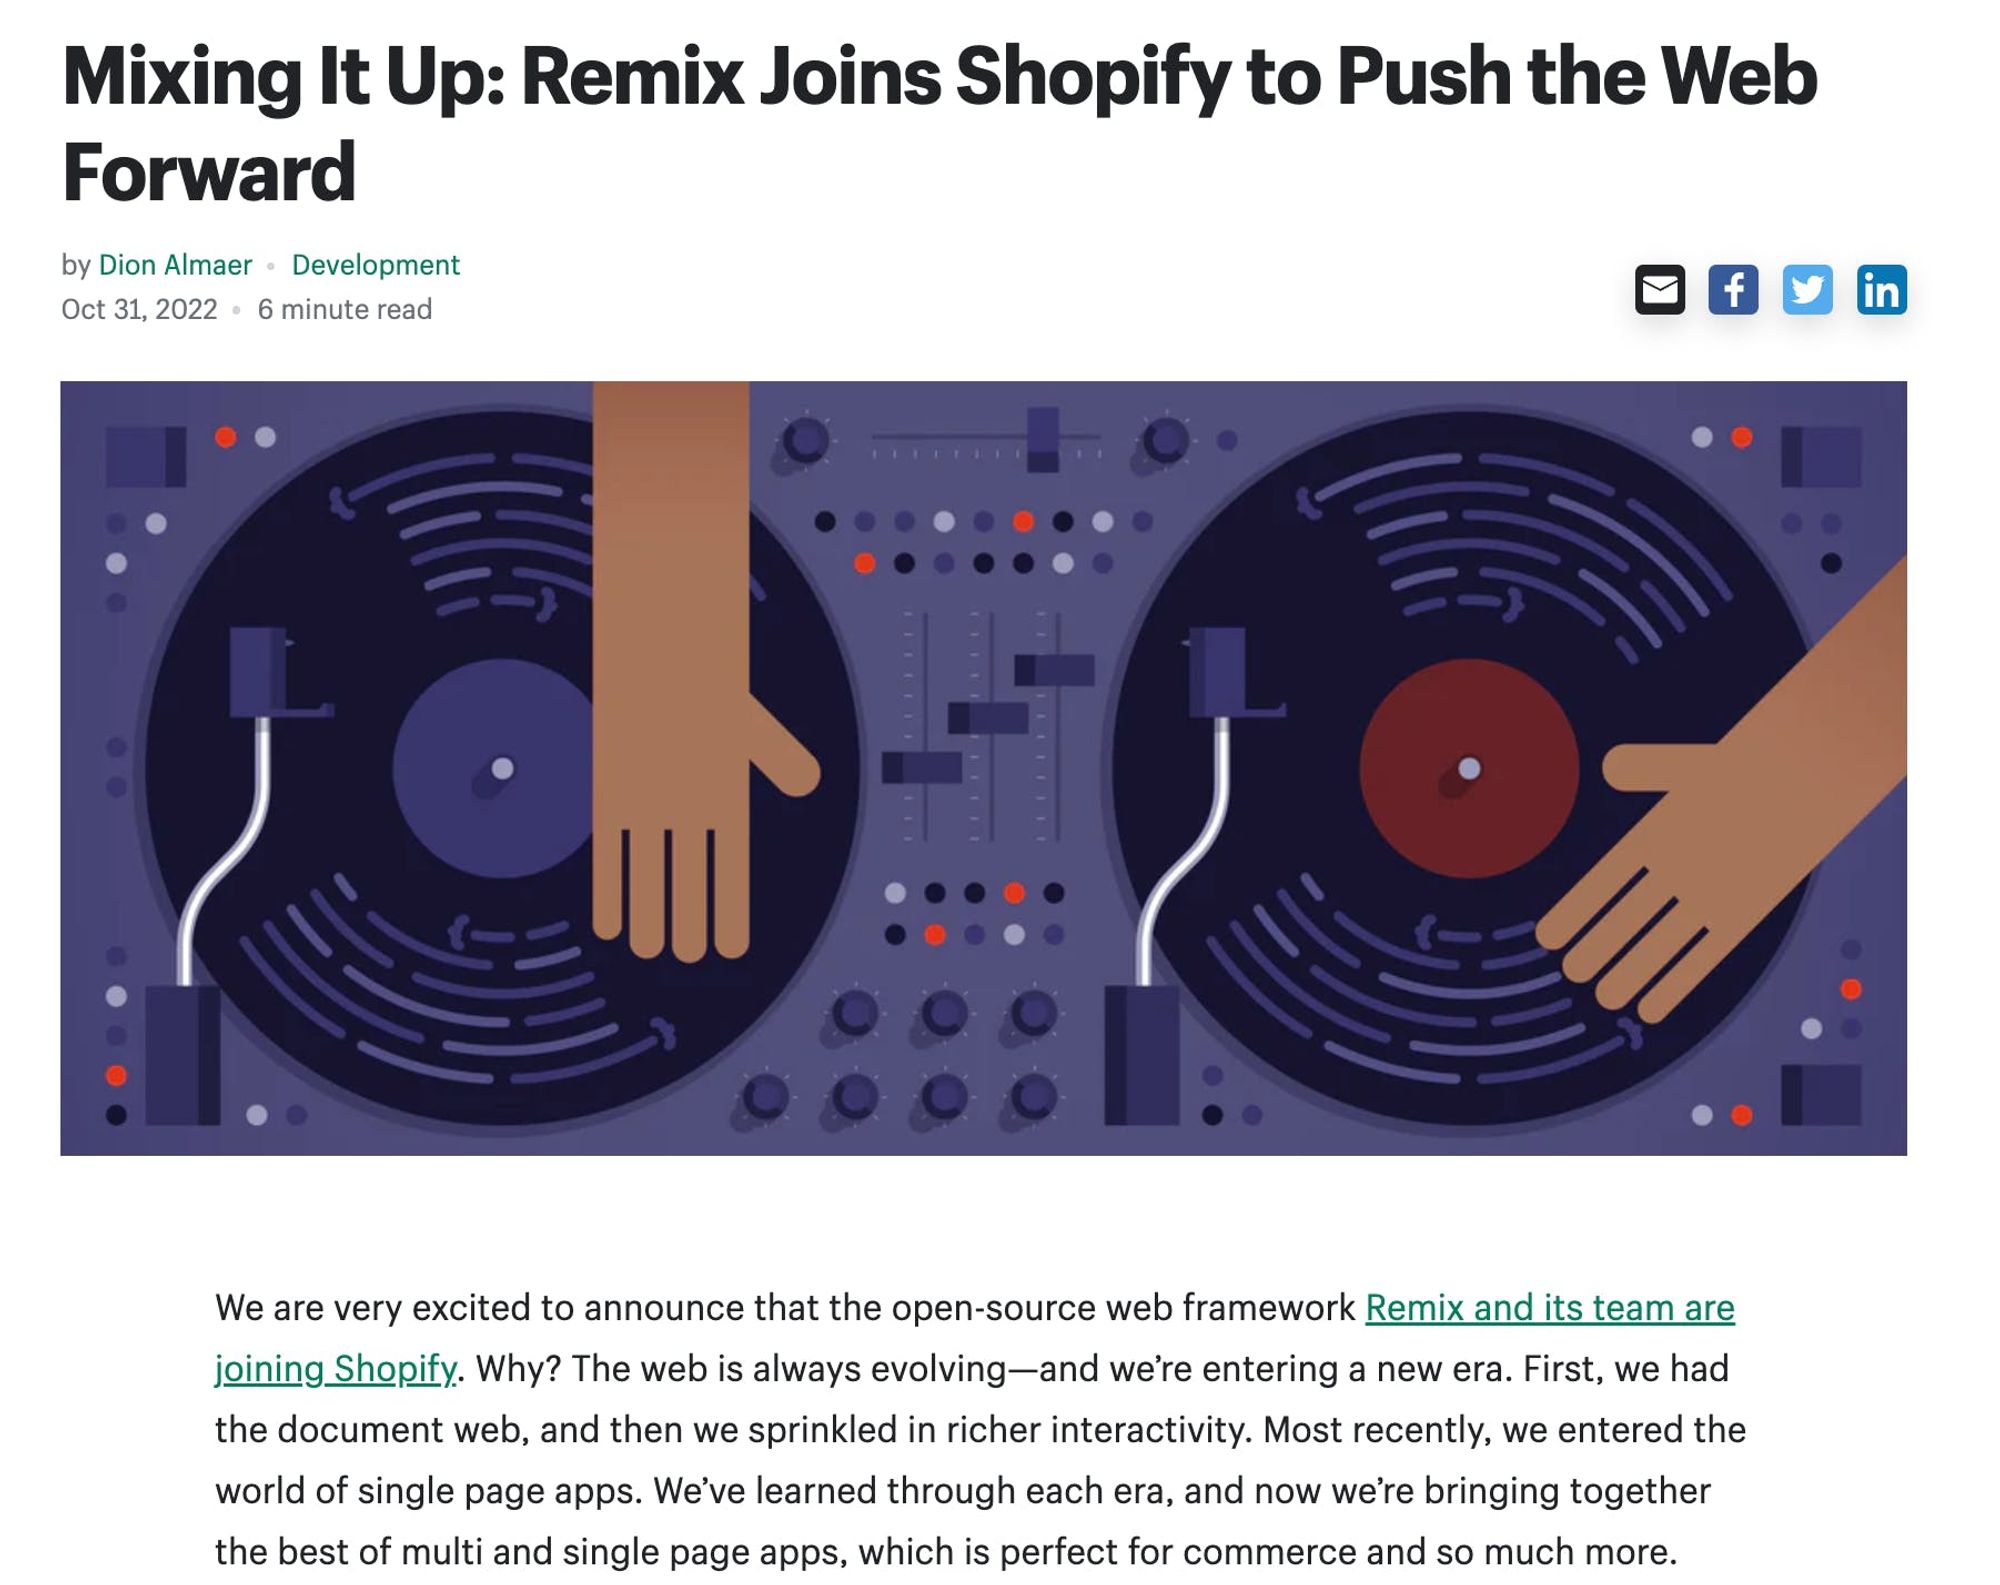  Remix Joins Shopify To Push Web Forward.jpg